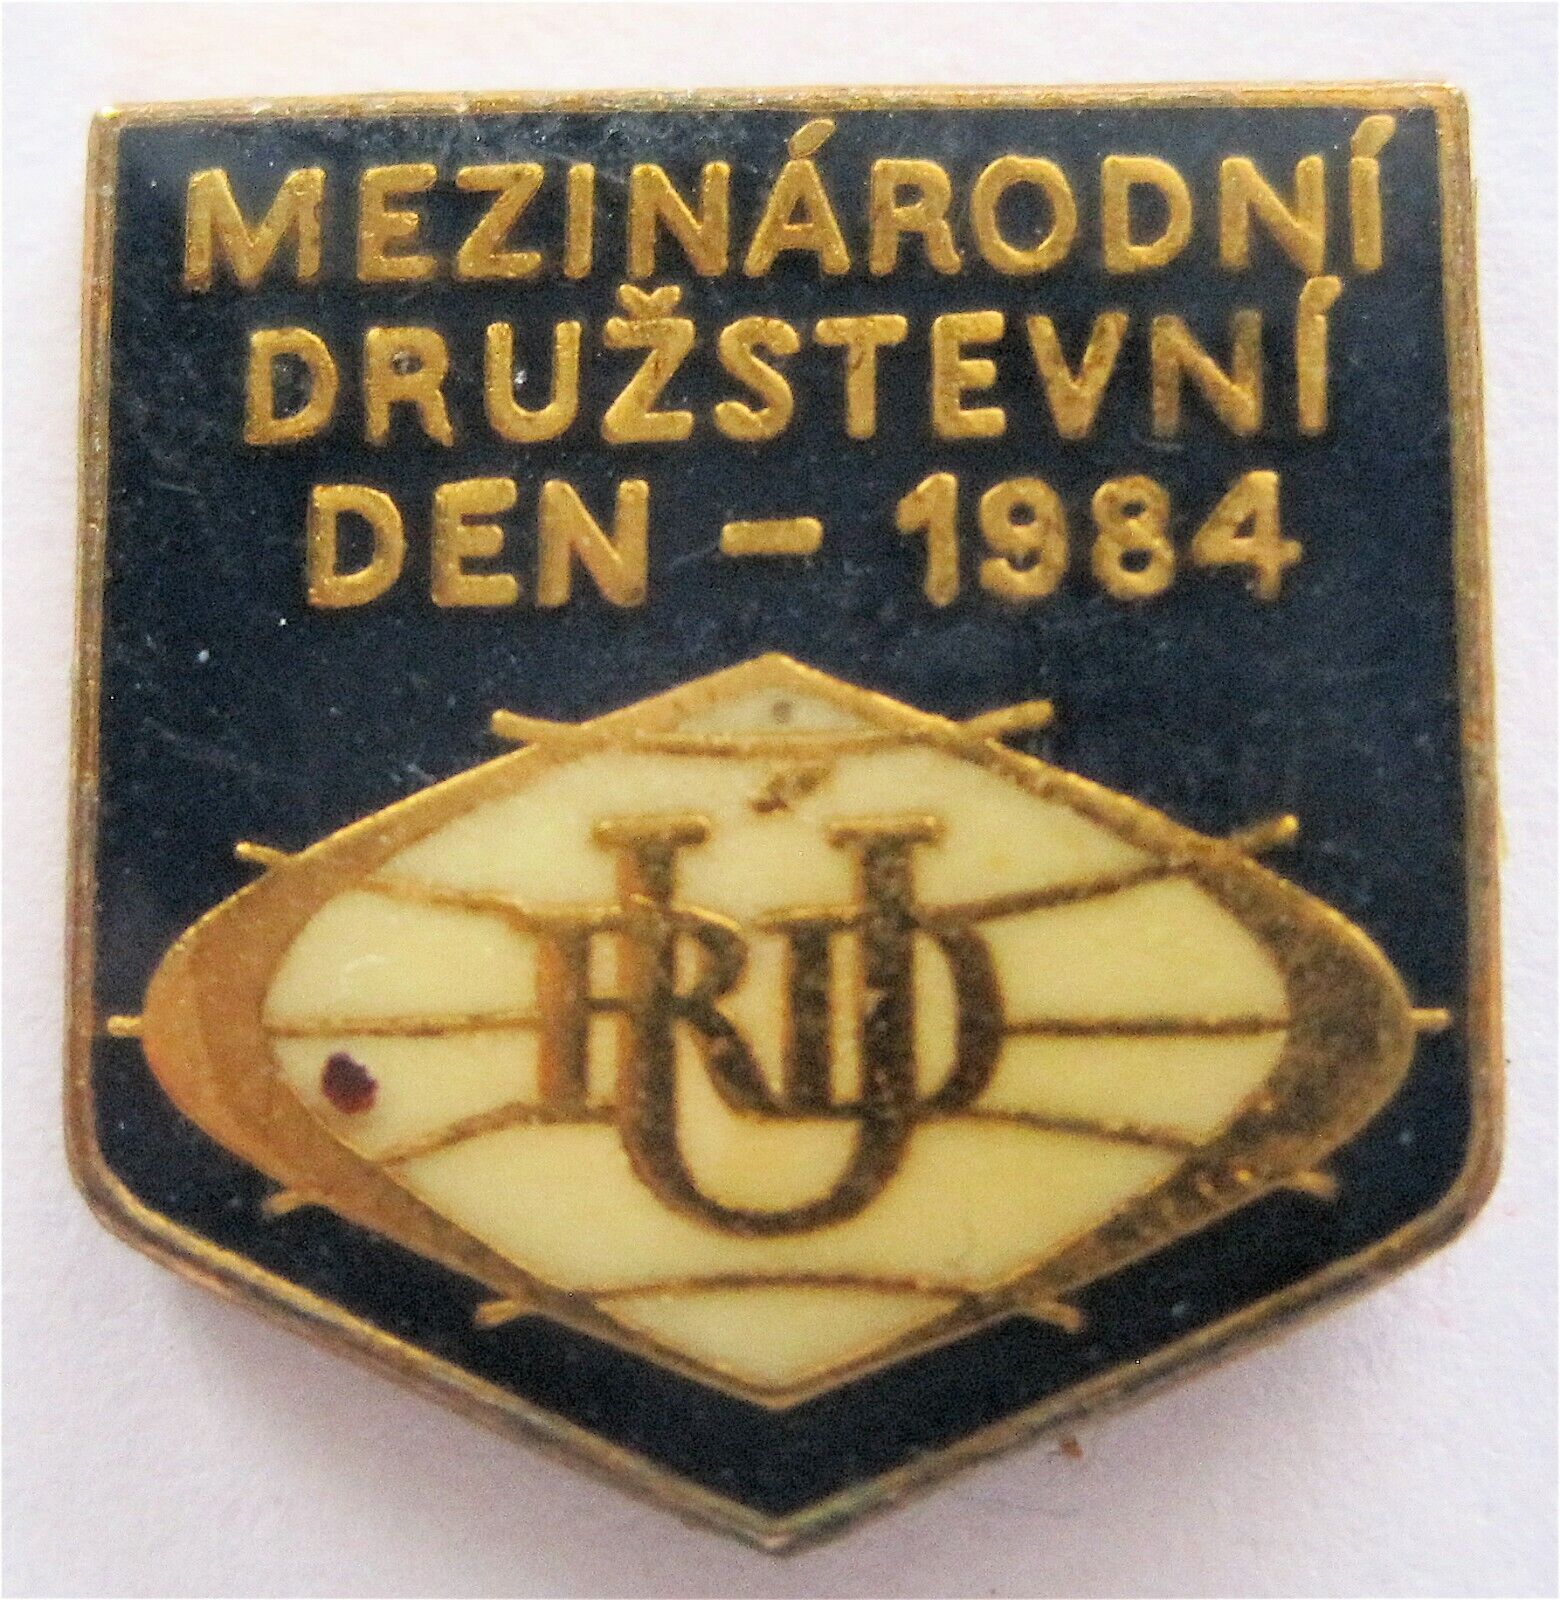 URD - 1984 INTERNATIONAL FRIENDSHIP DAY - DDR - EAST GERMANY PIN